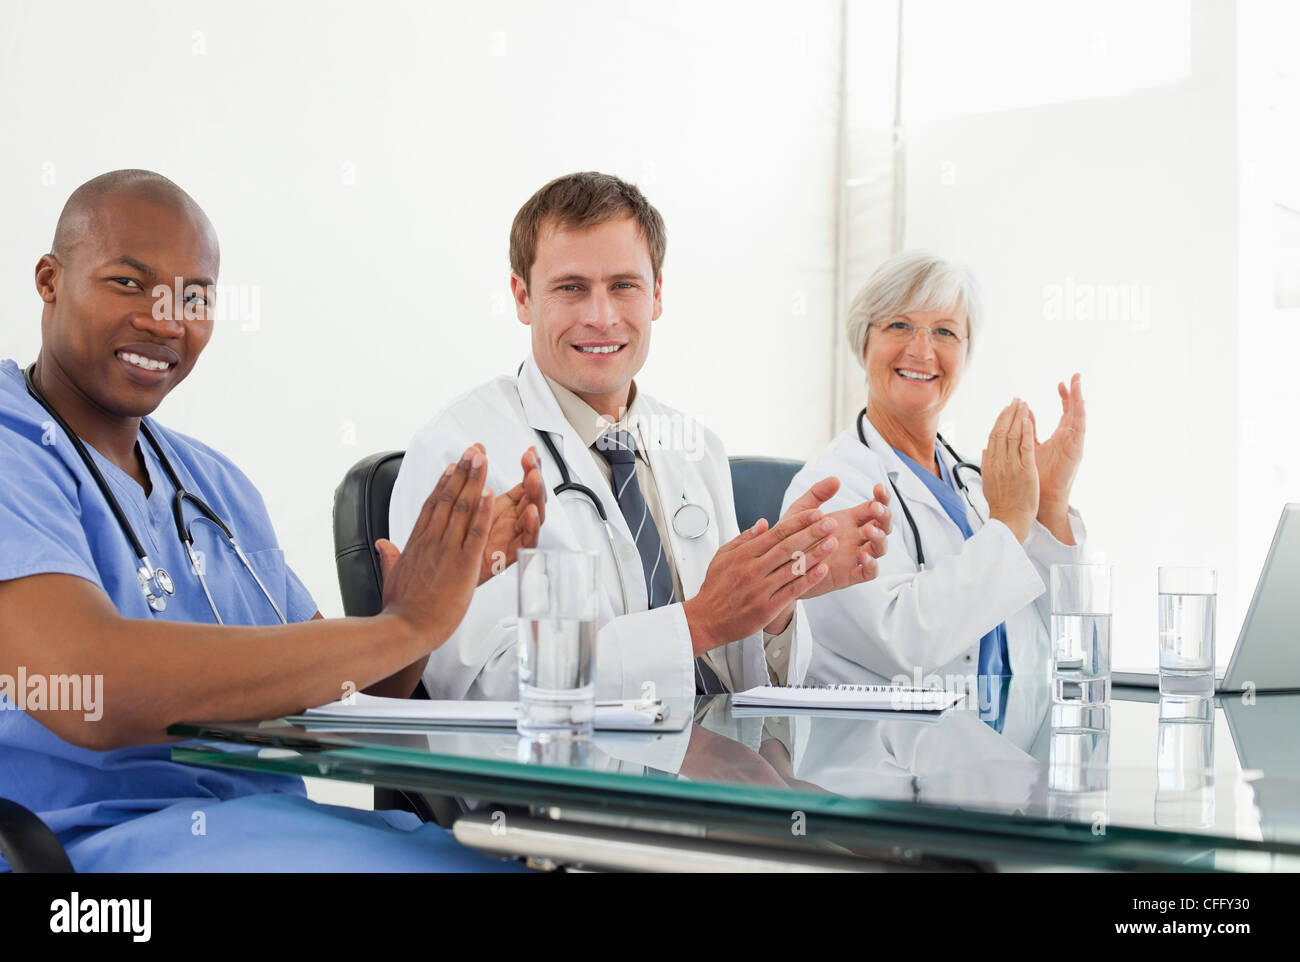 Smiling doctors applauding Stock Photo